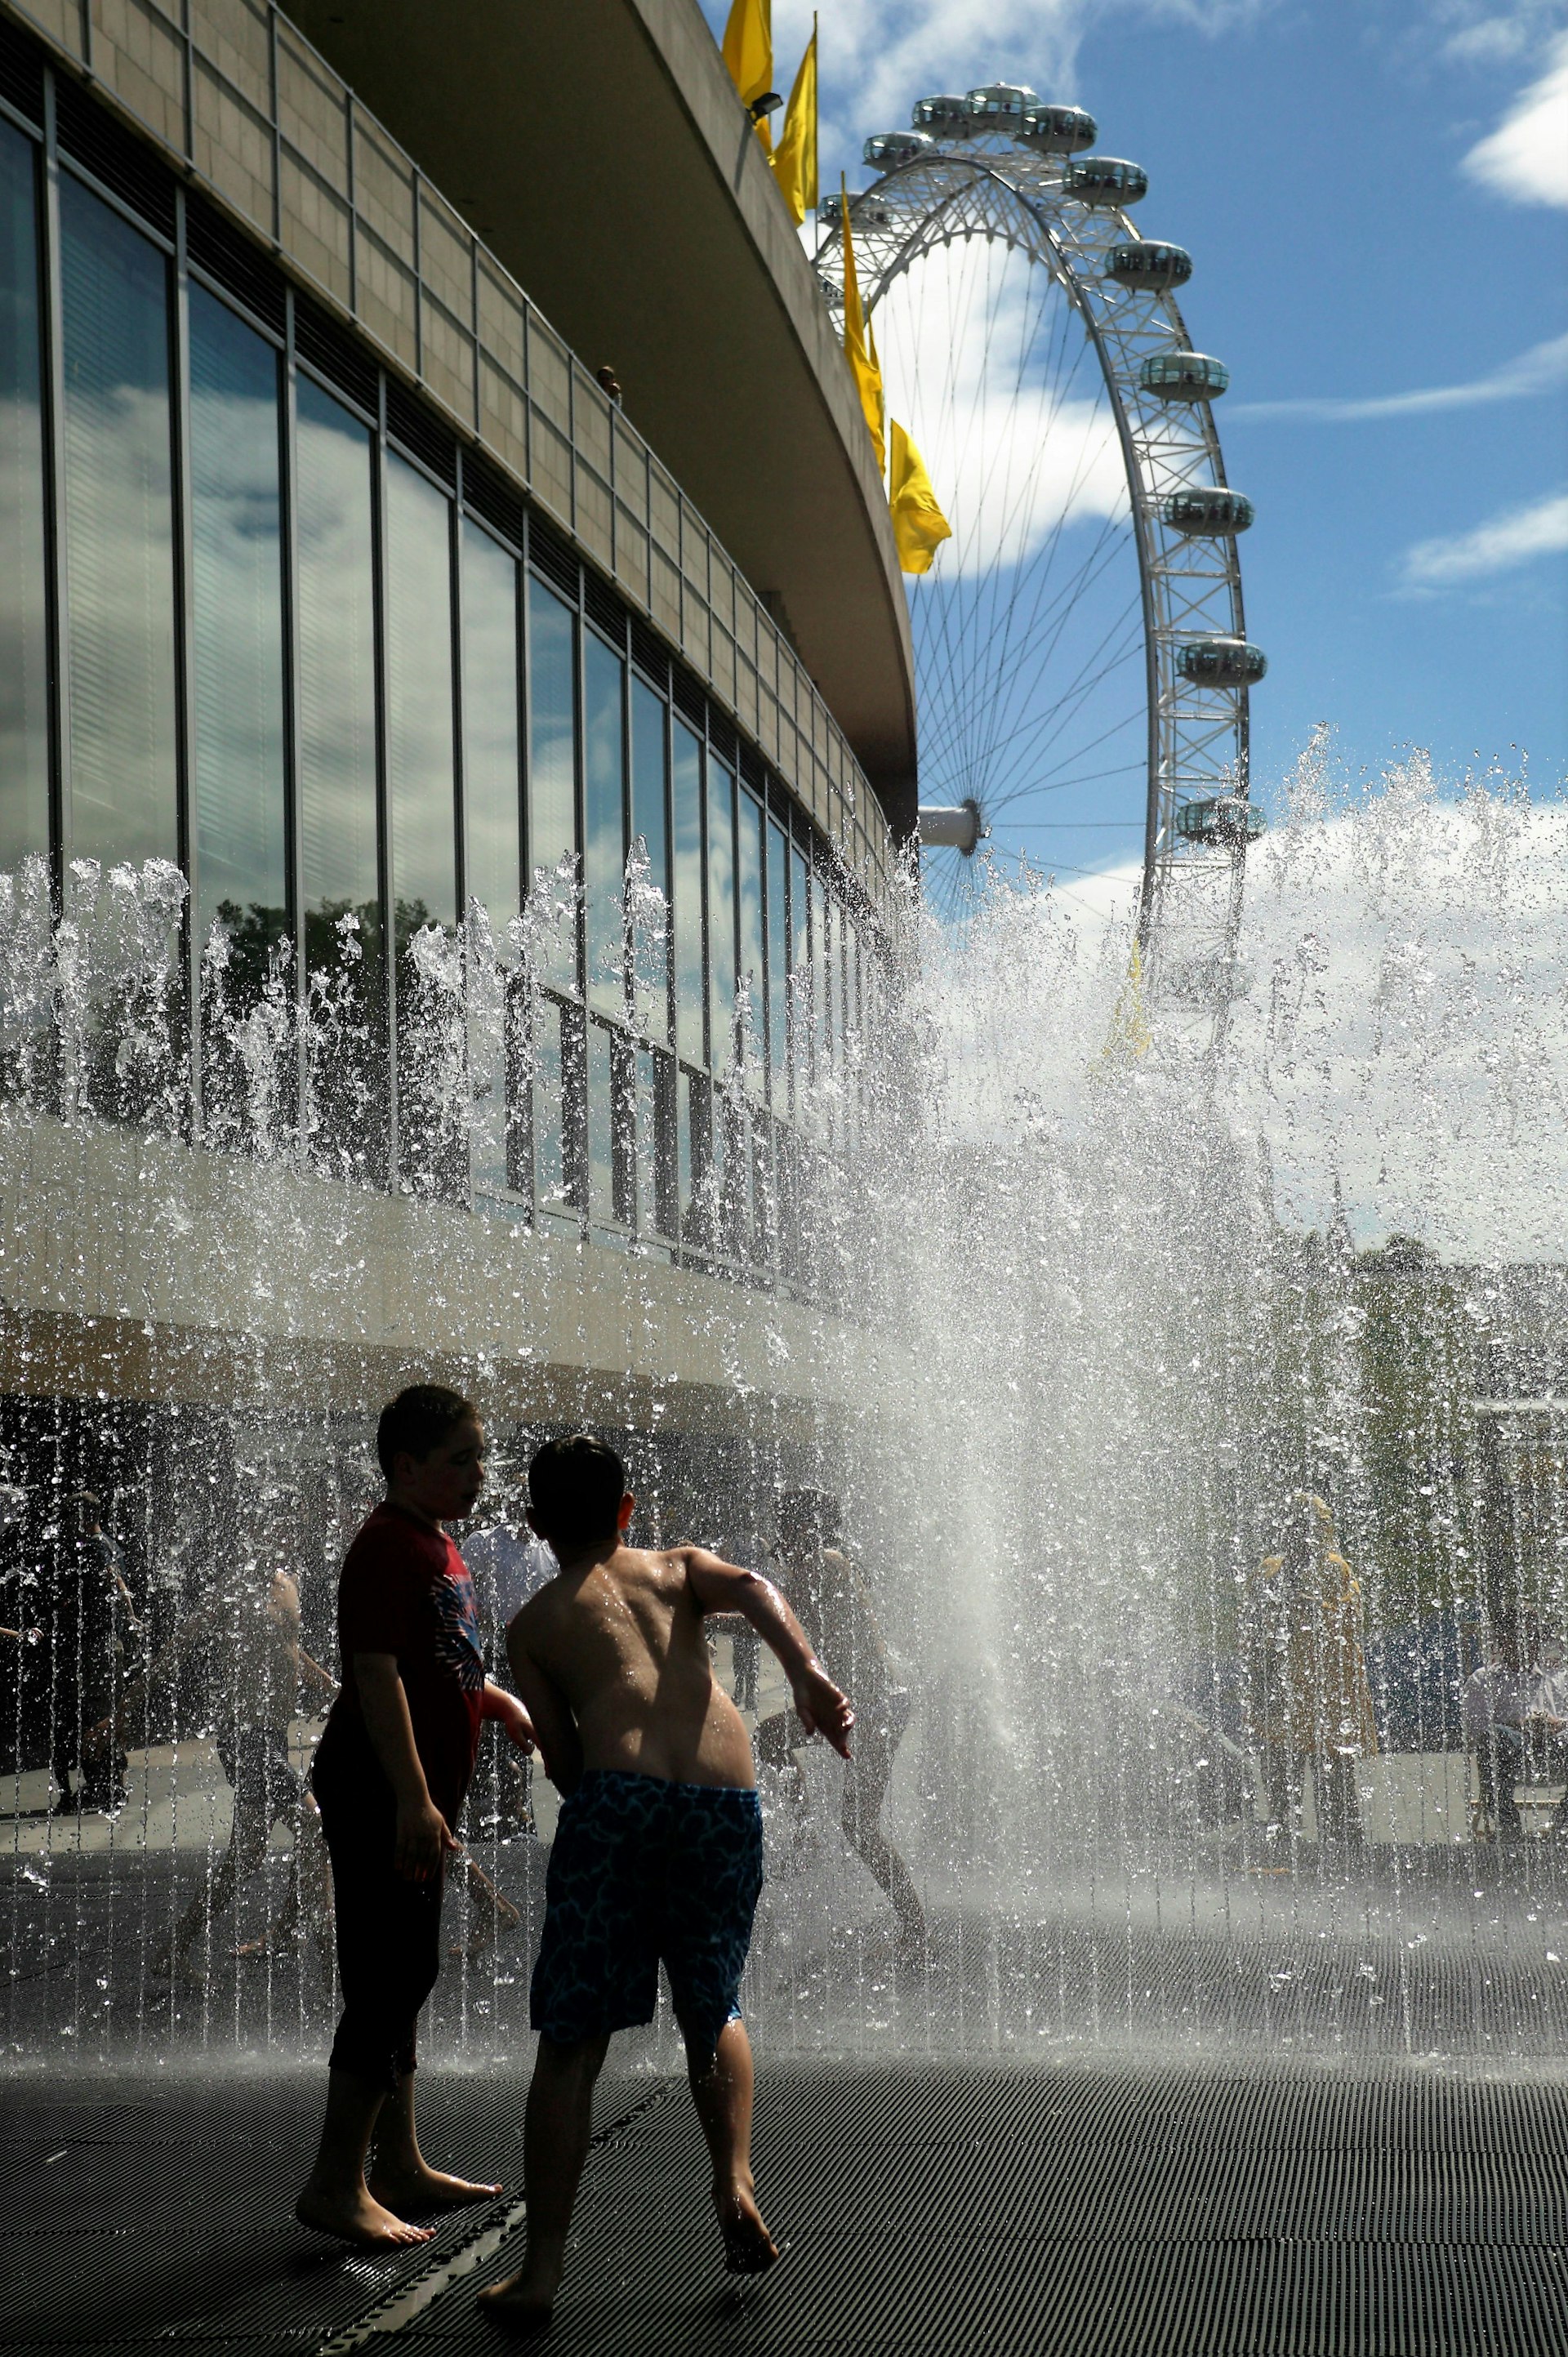 Children splashing in the fountains outside the Royal Festival Hall, London.